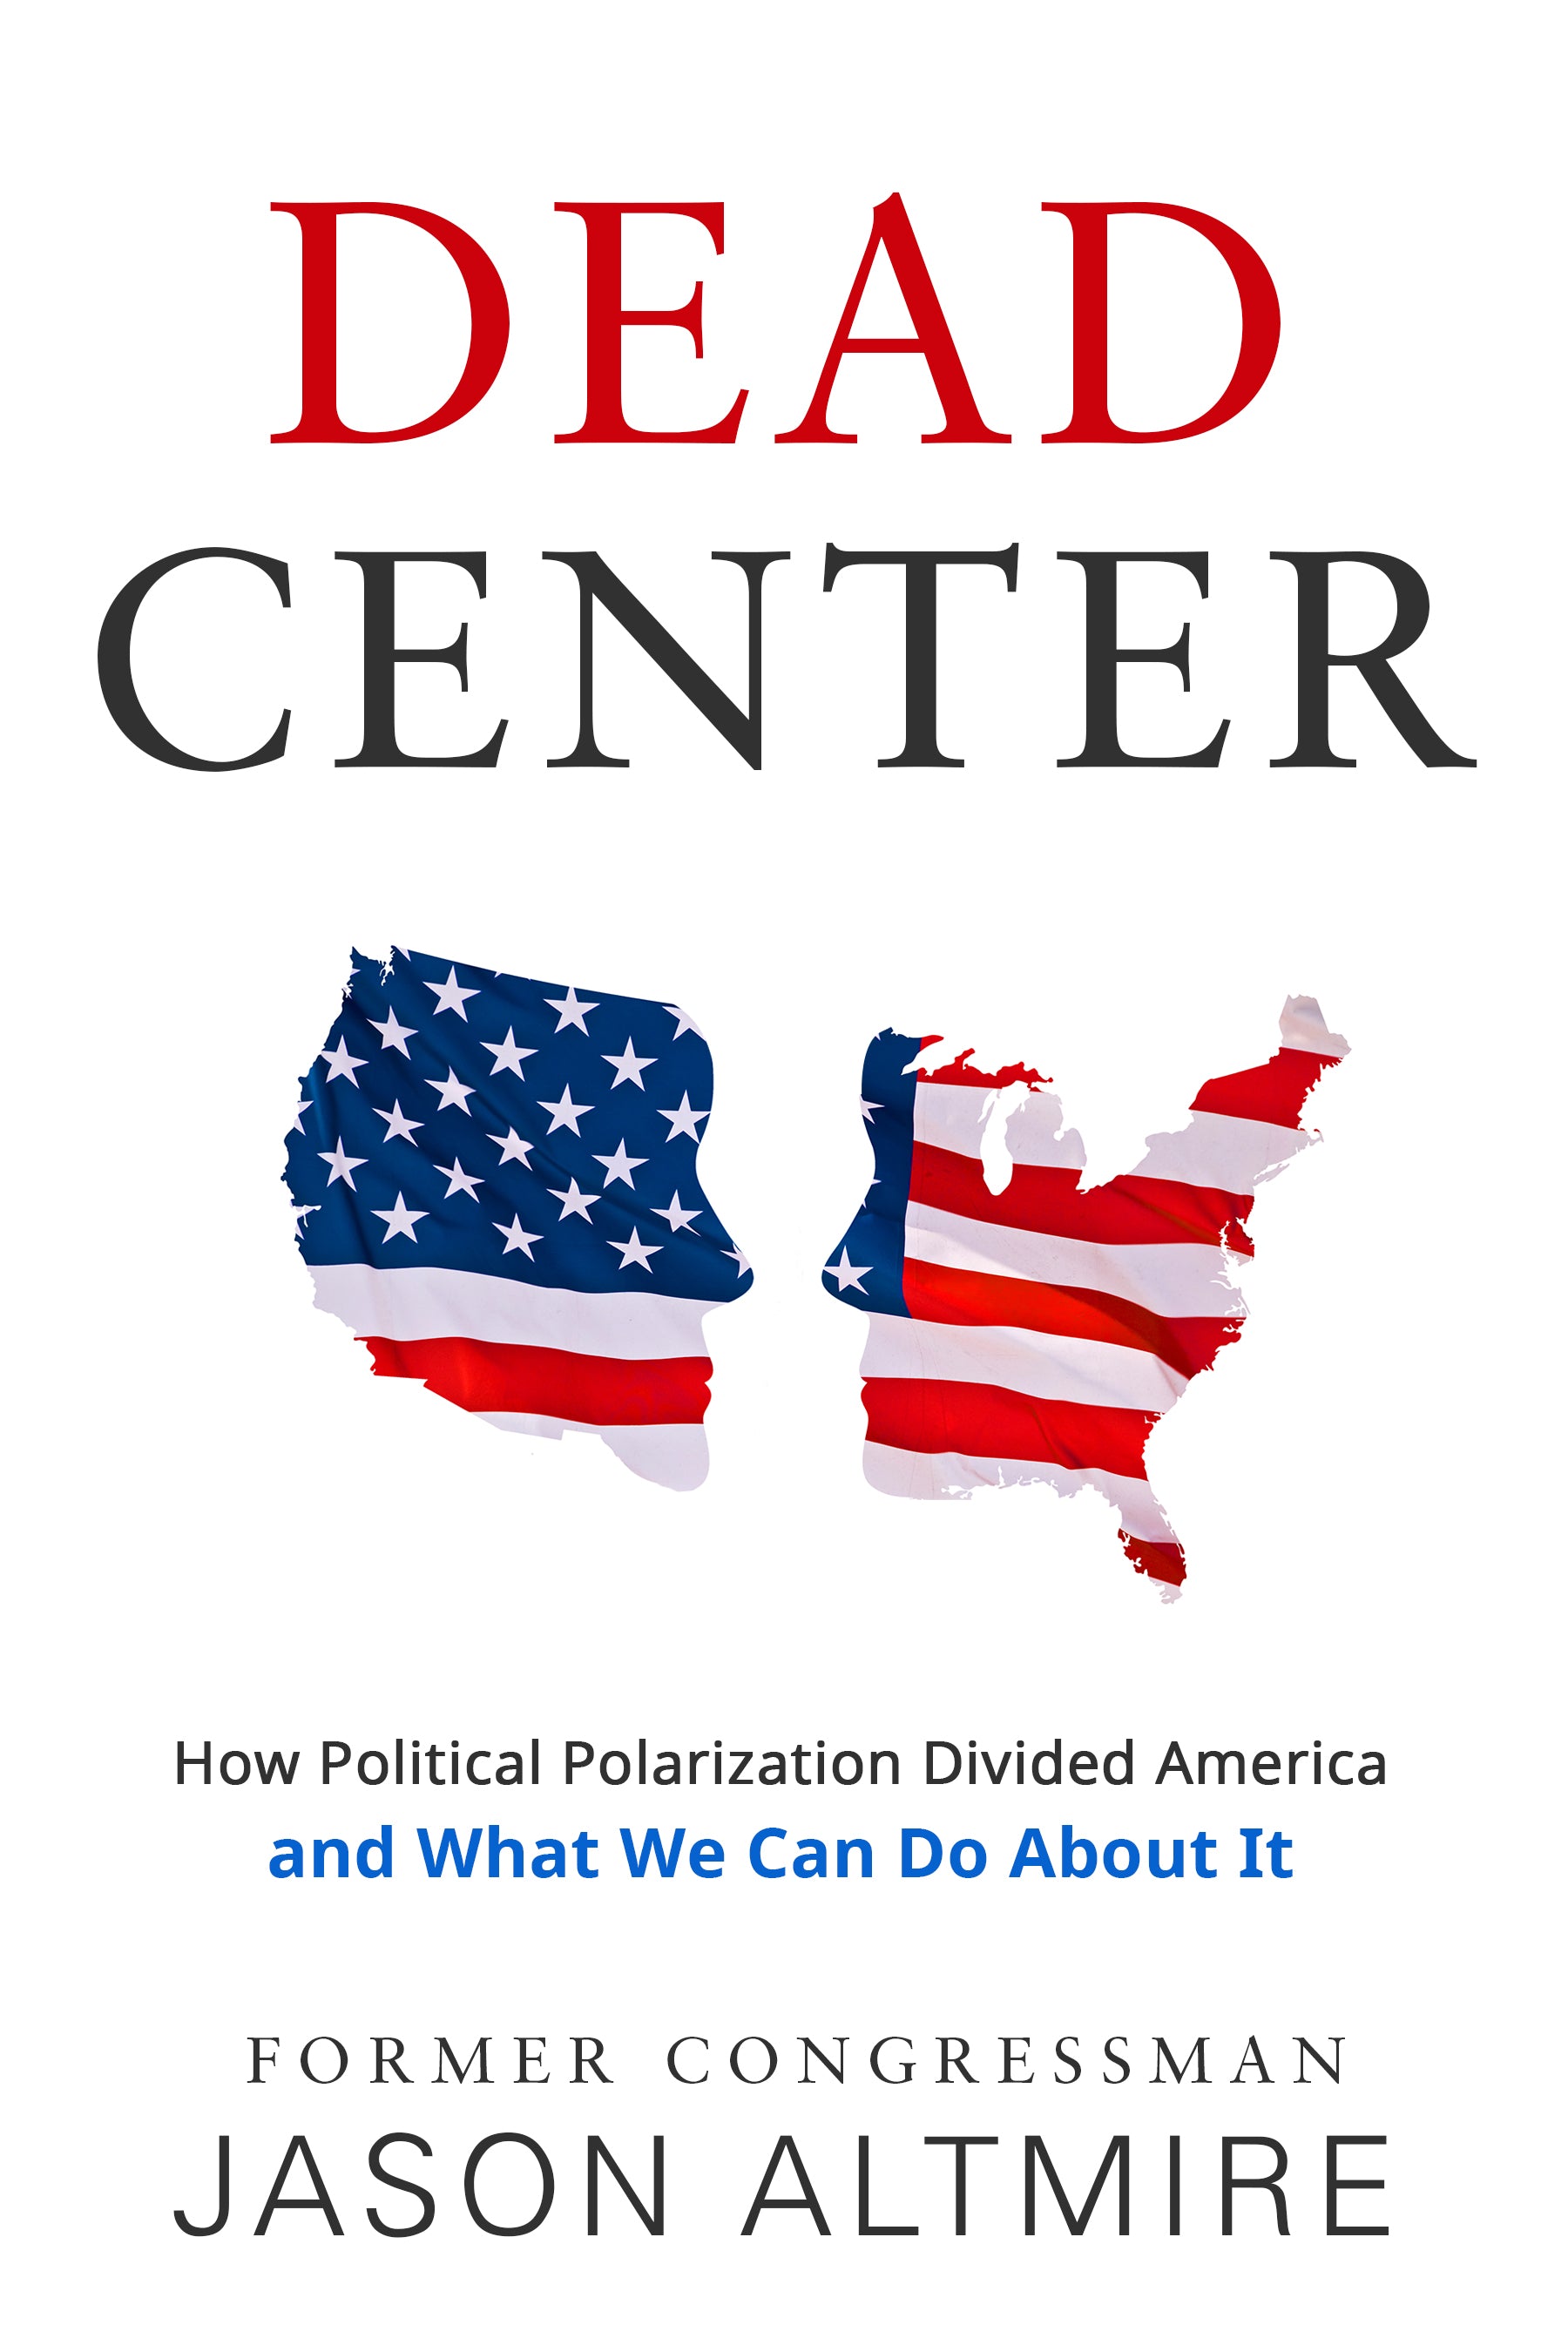 Jason Altmire's “Dead Center” reigns as the Sunbury Press bestseller for August